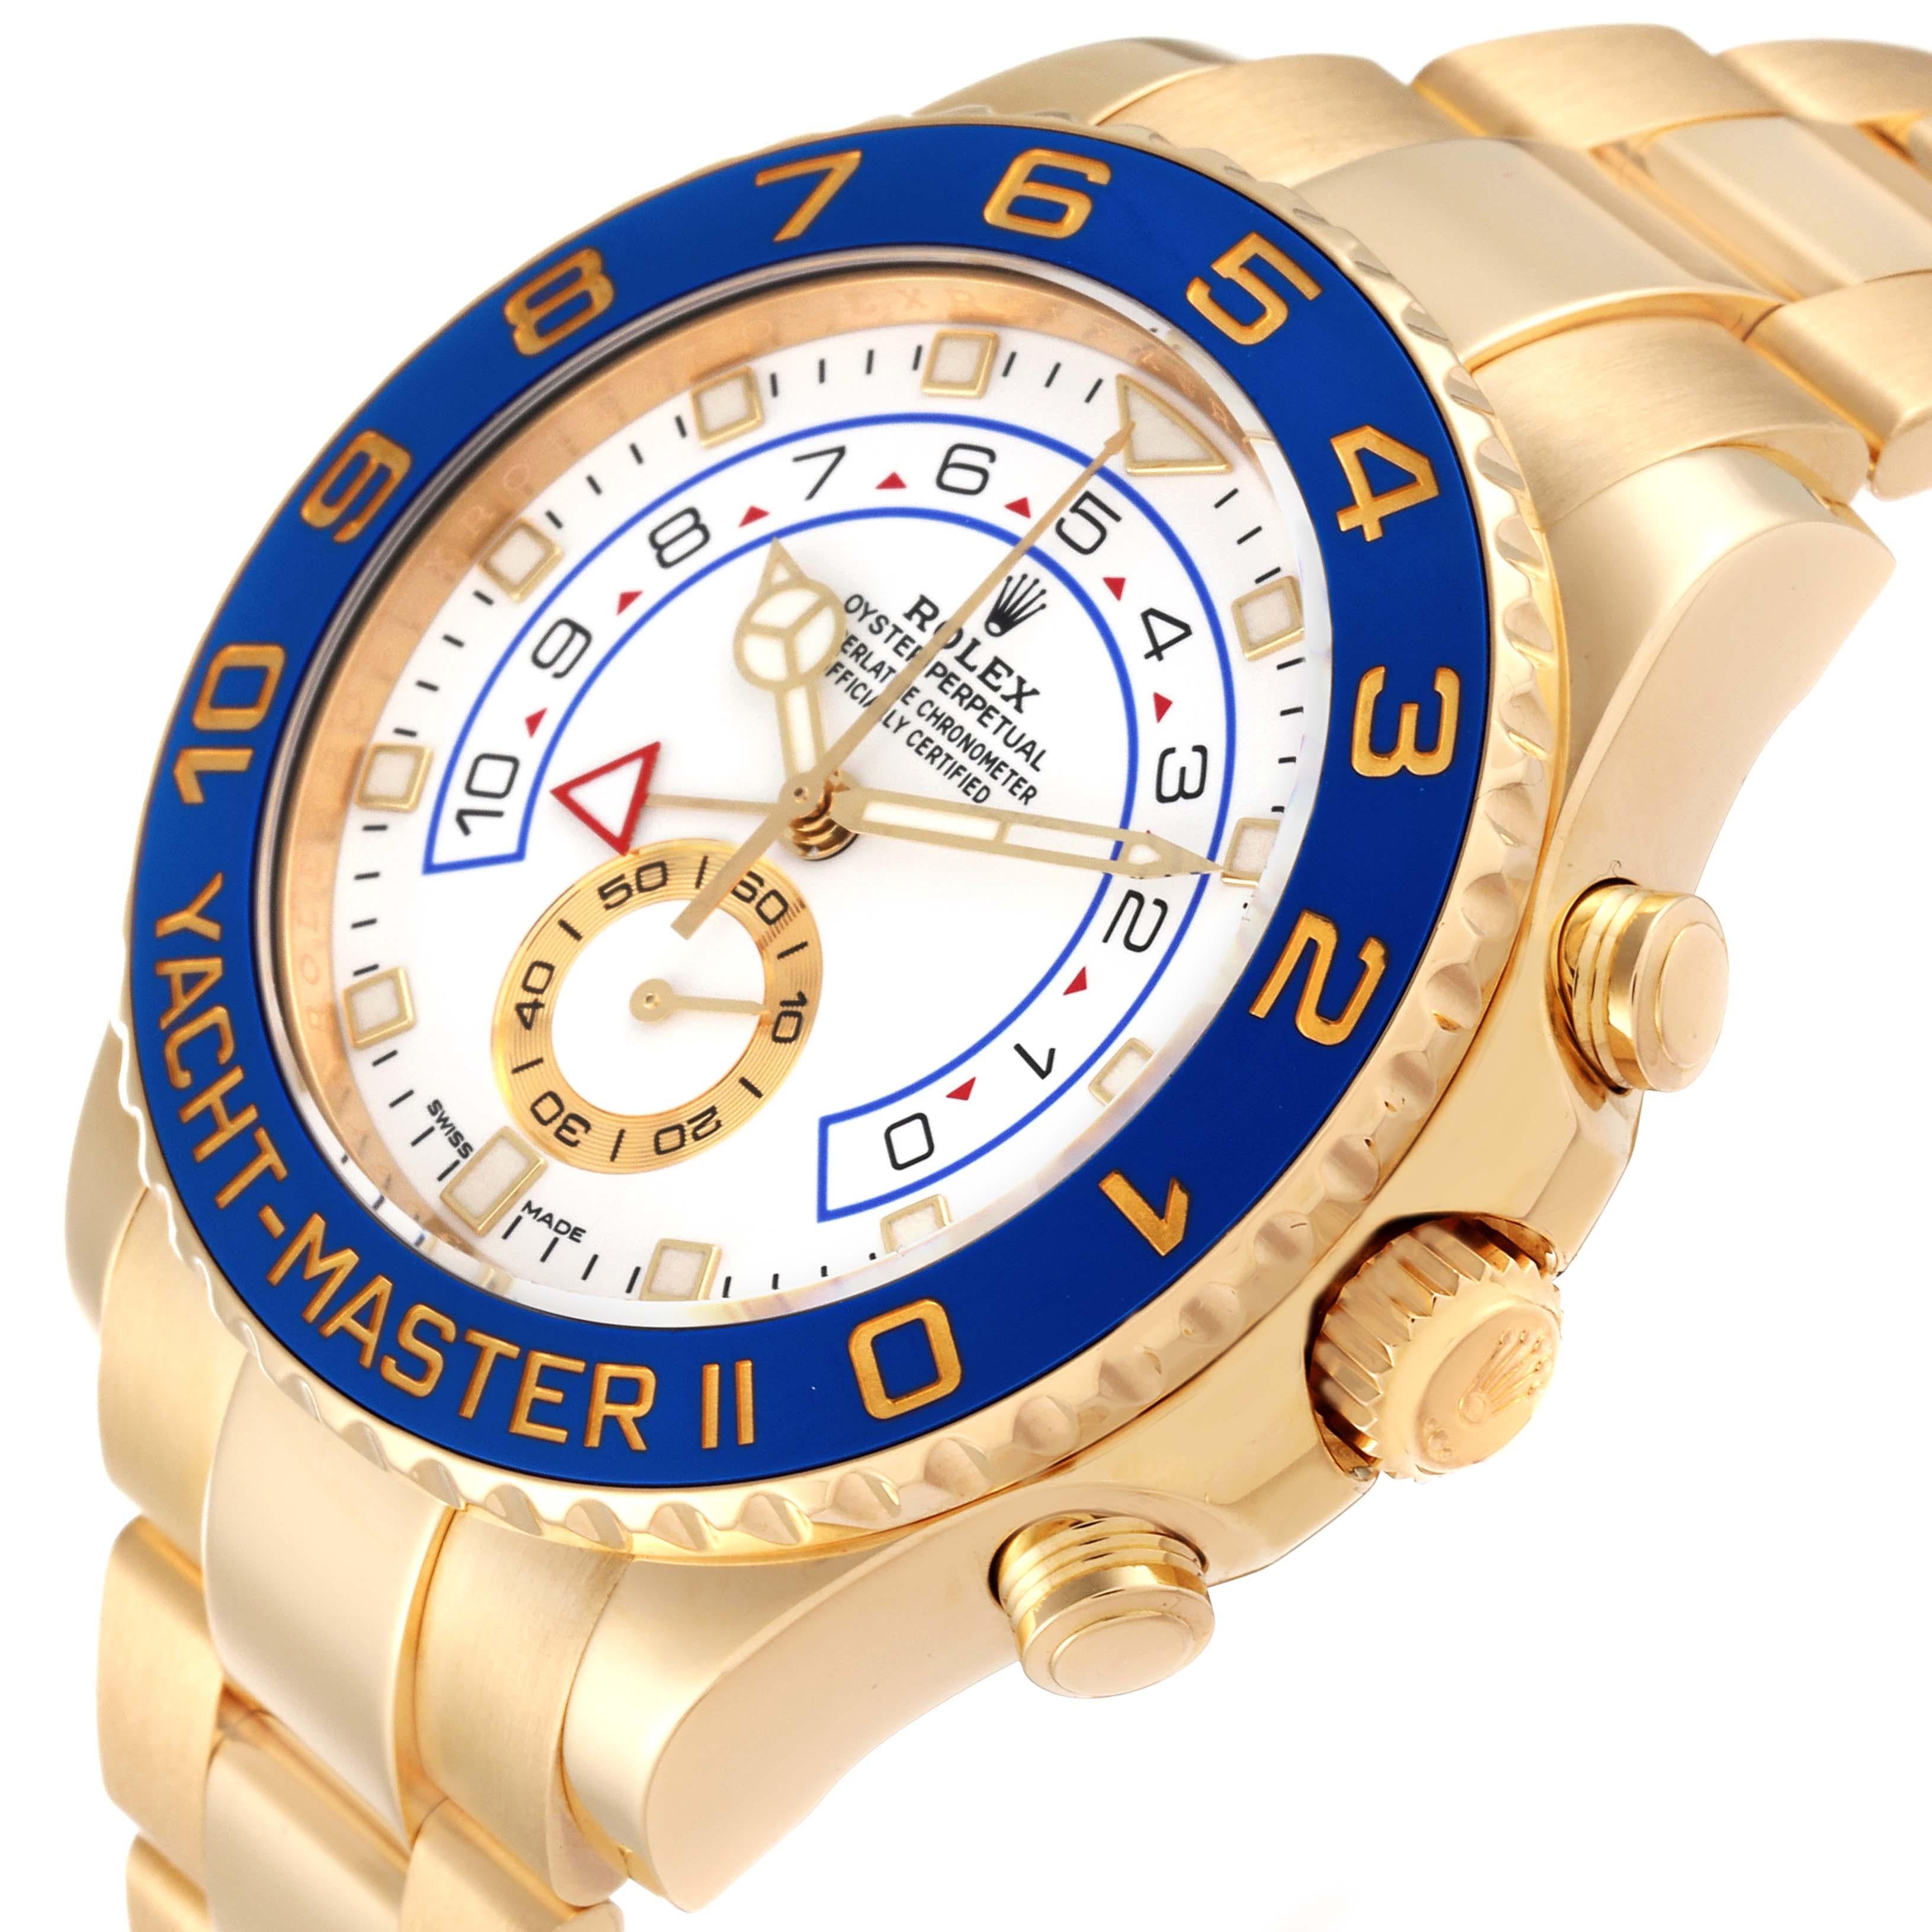 Rolex Yachtmaster II Regatta Chronograph Yellow Gold Men's Watch 116688 Box Card For Sale 2